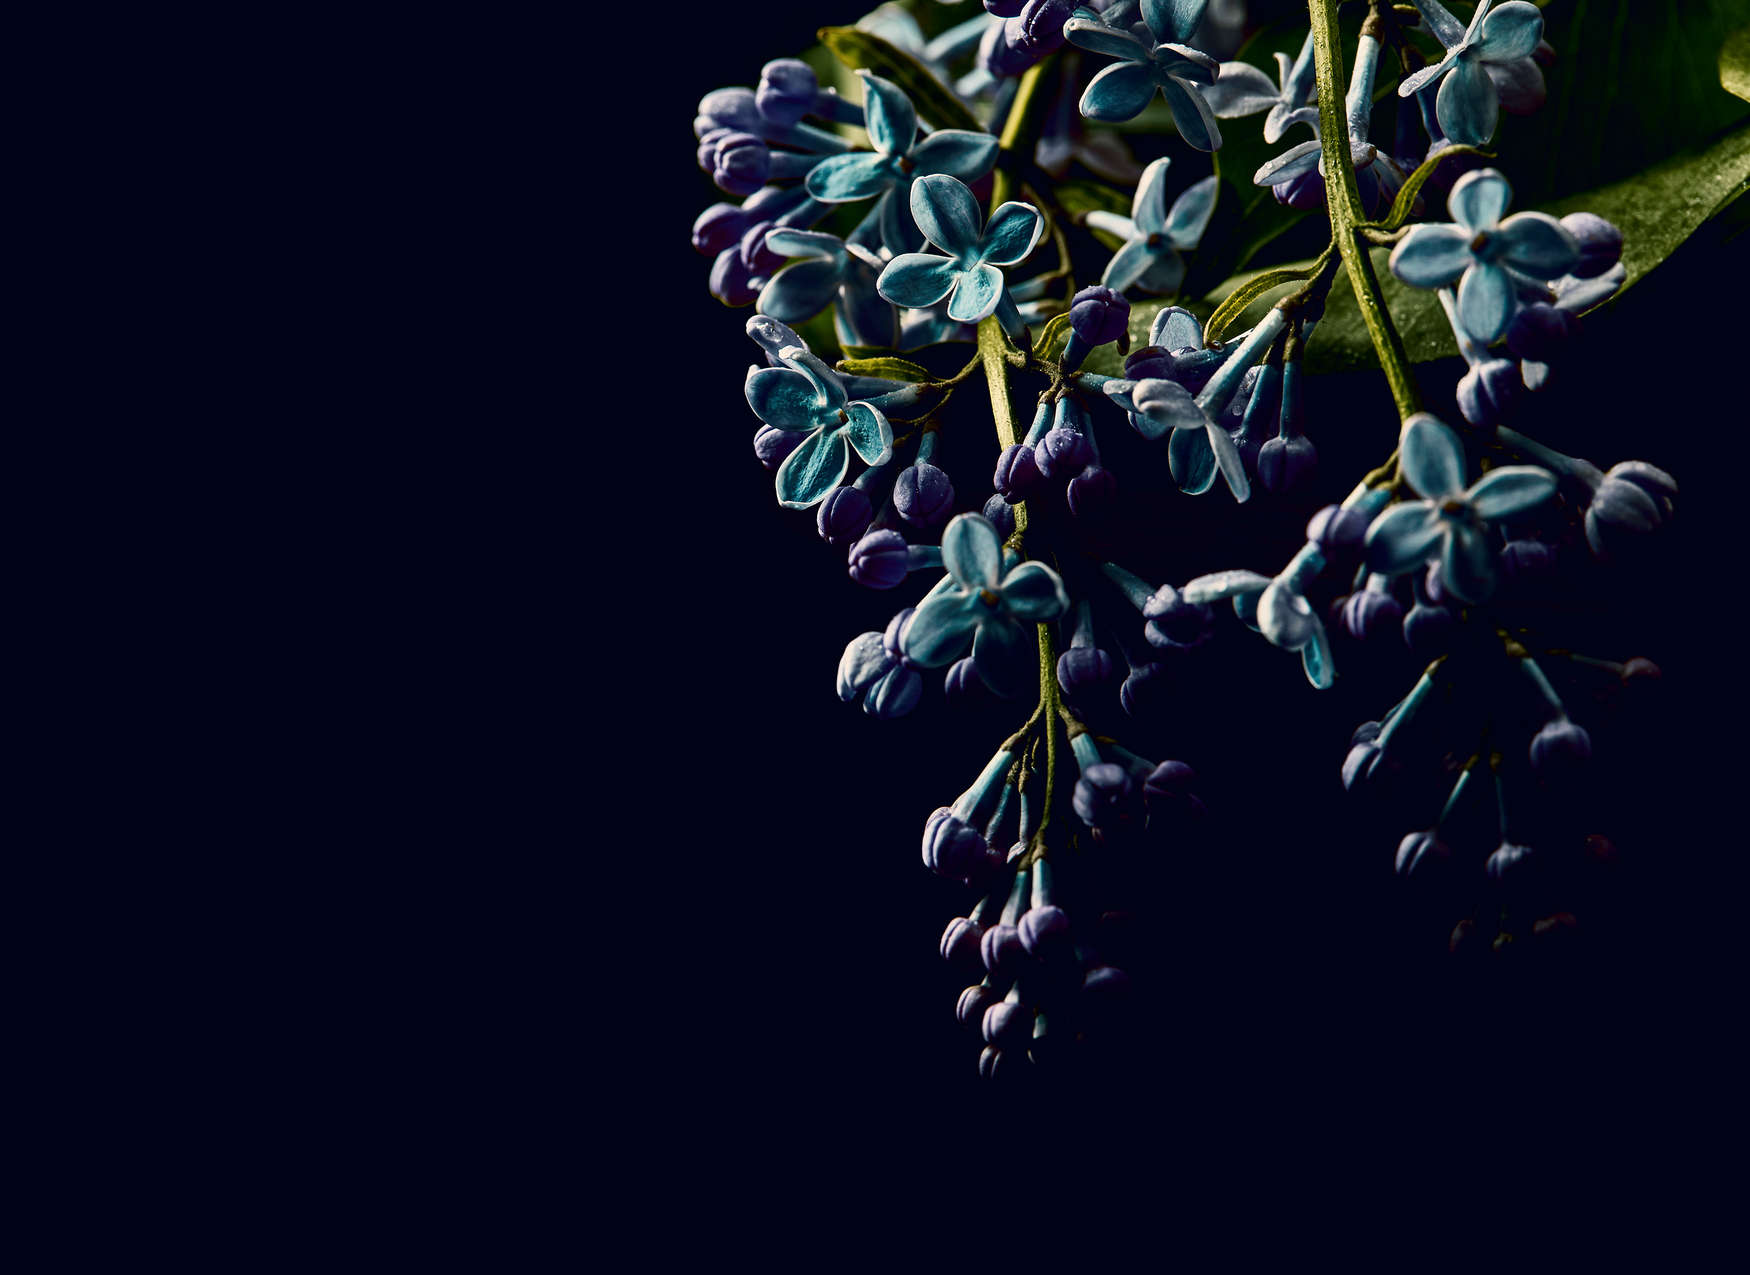             Fotomural Flores sobre fondo negro aggrappante plano - Azul, Verde, Negro
        